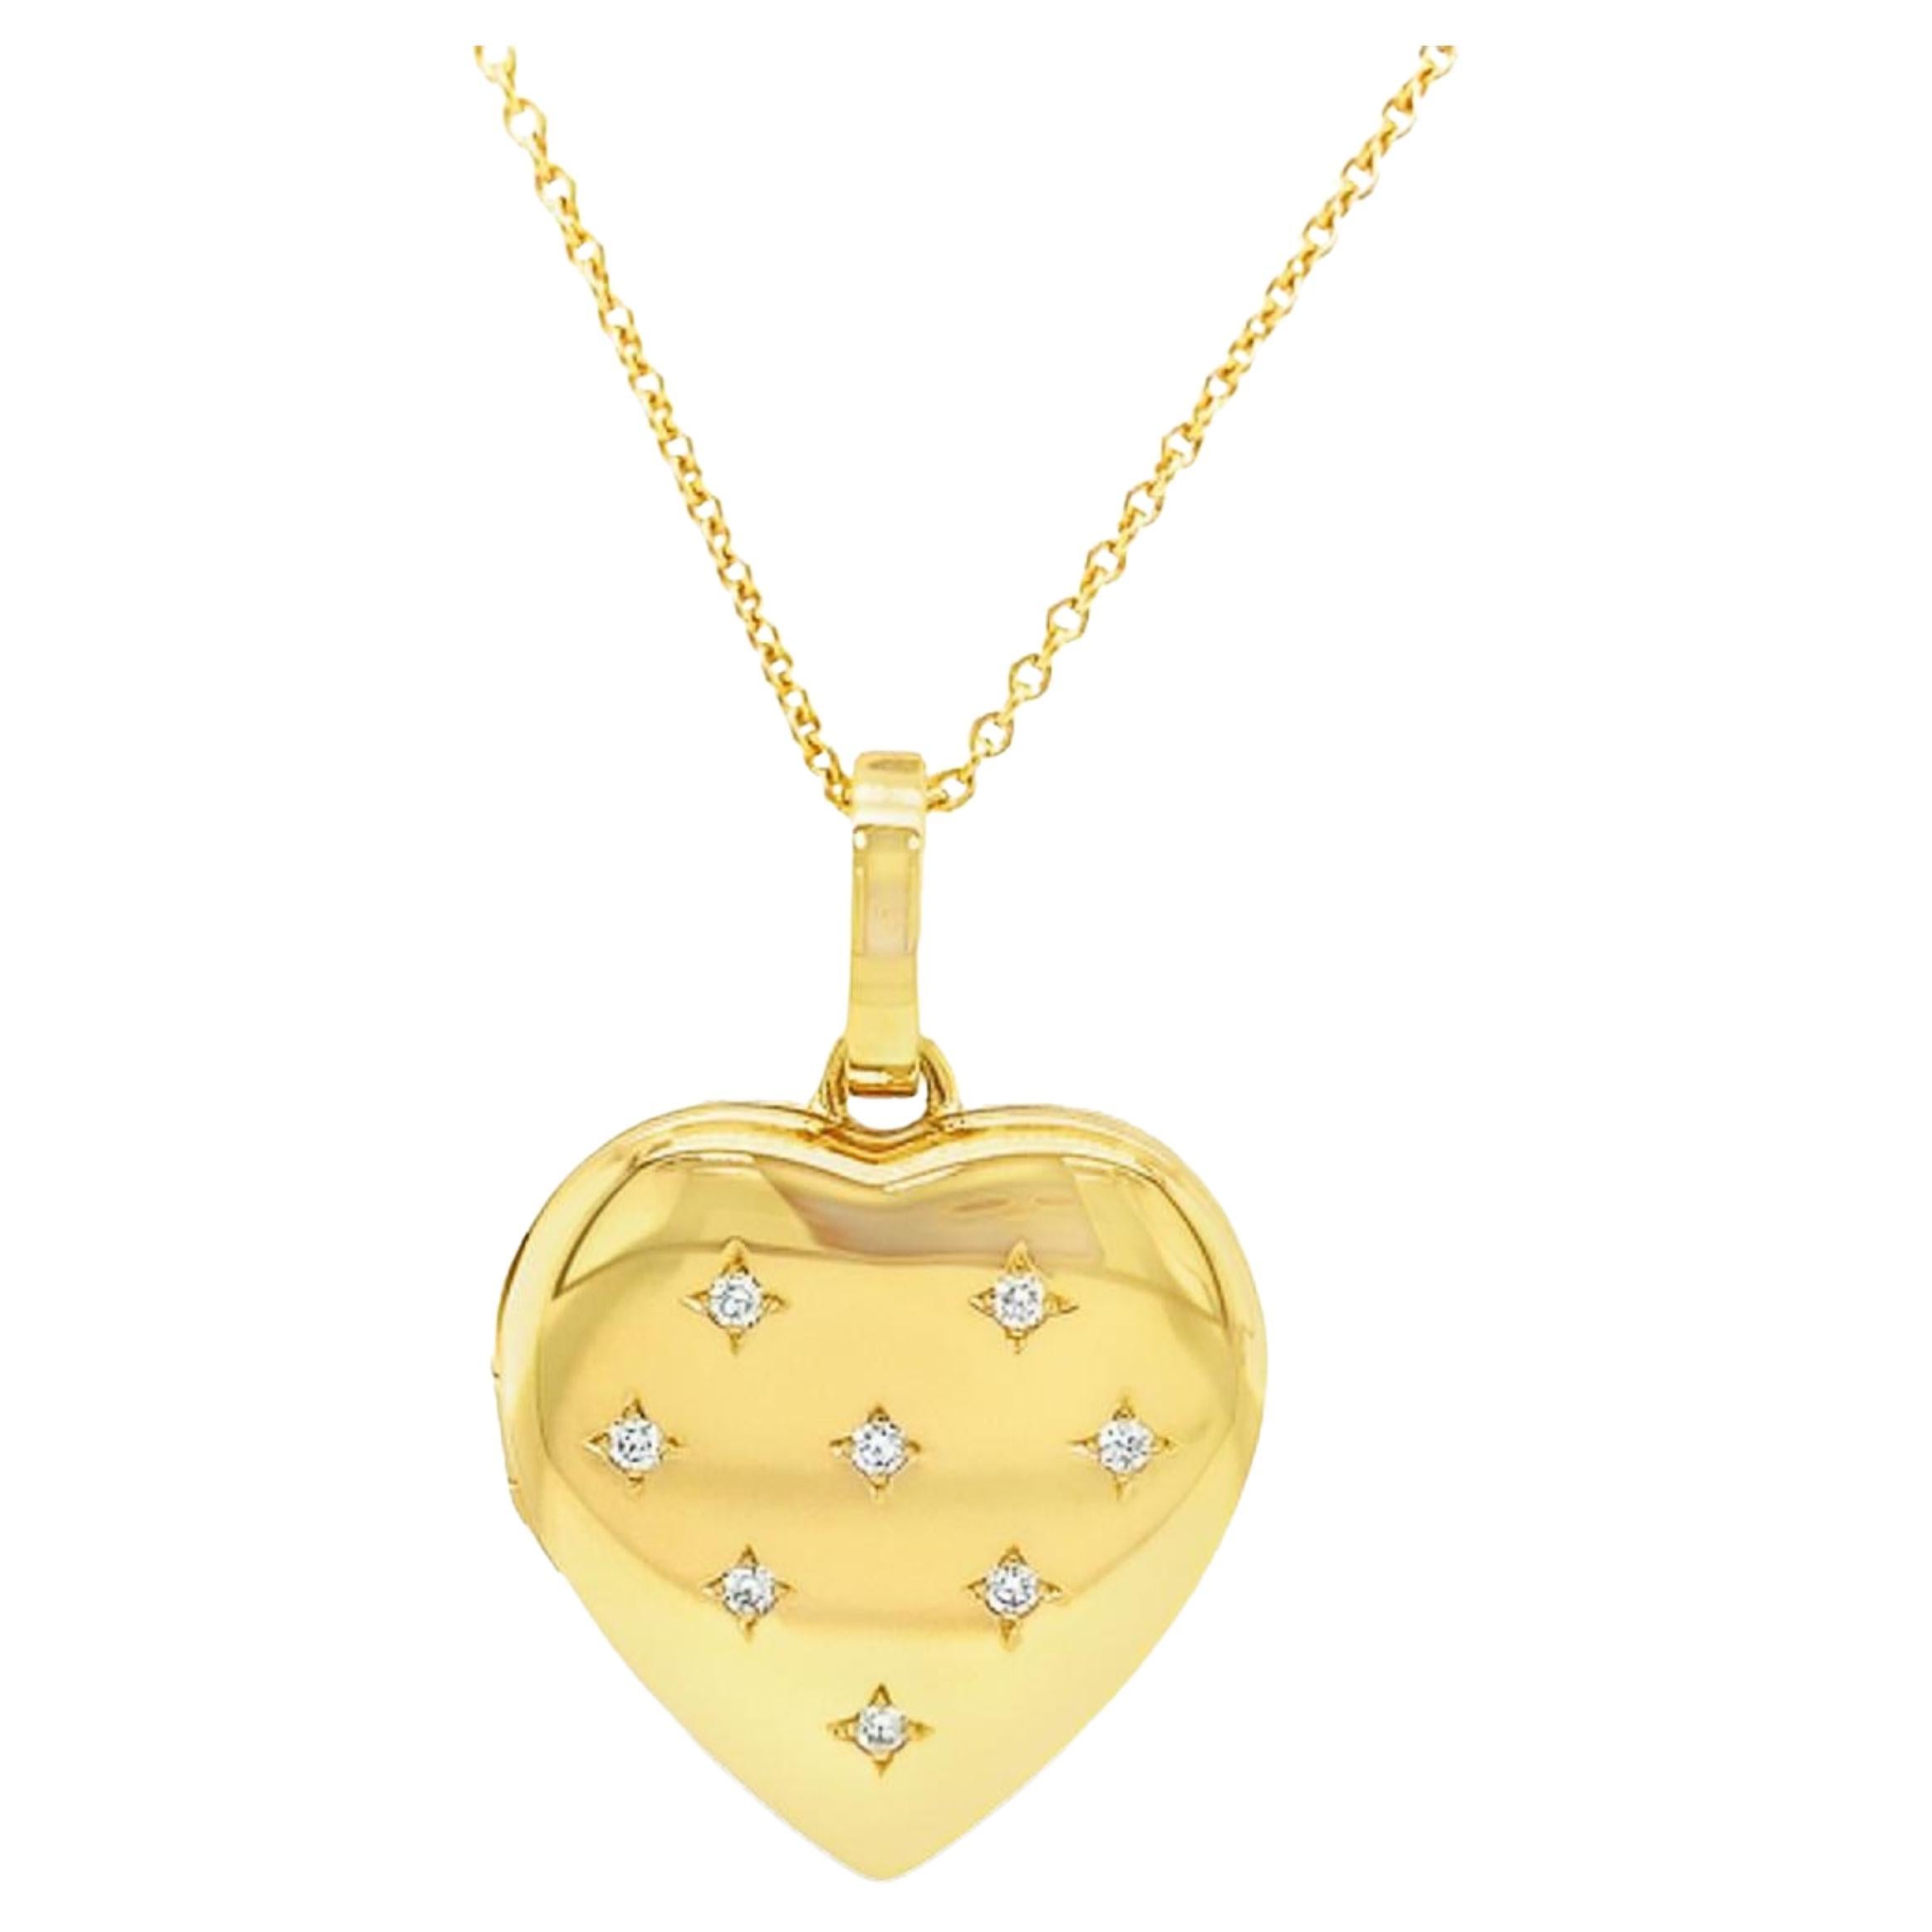 Heart Shaped Locket Pendant by Victor Mayer, 18k Yellow Gold, 8 Diamonds 0.16ct